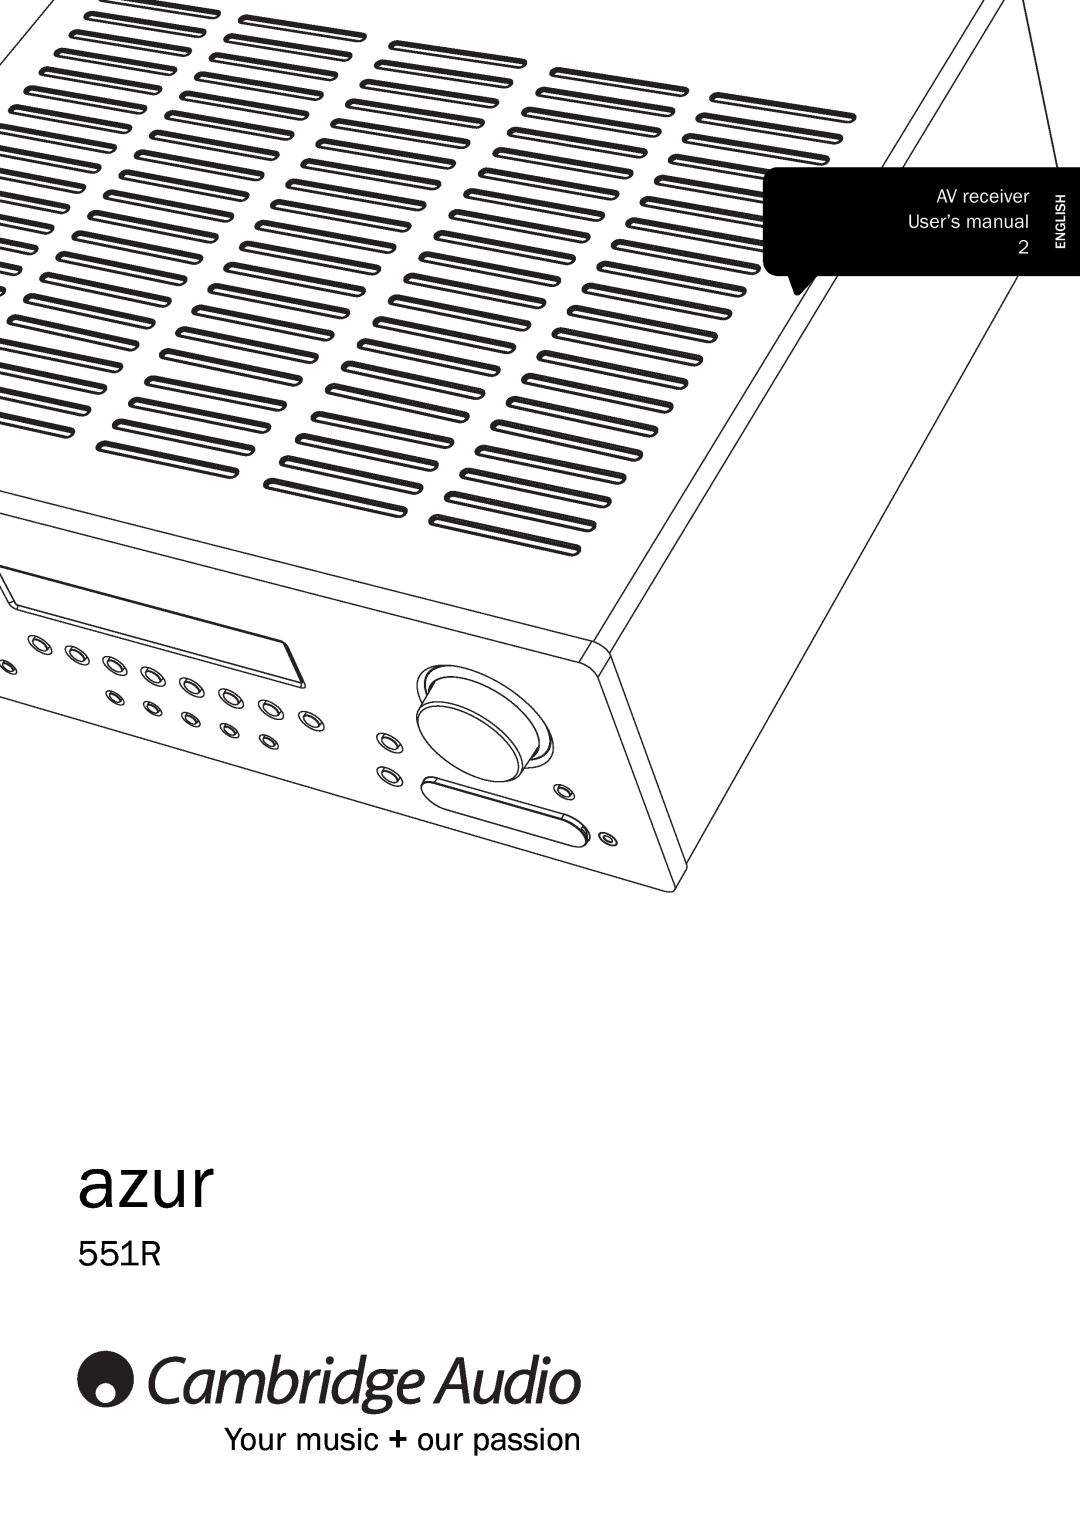 Cambridge Audio 551R user manual azur, Yourmusic+ourpassion, AVreceiver User’smanual2, English 